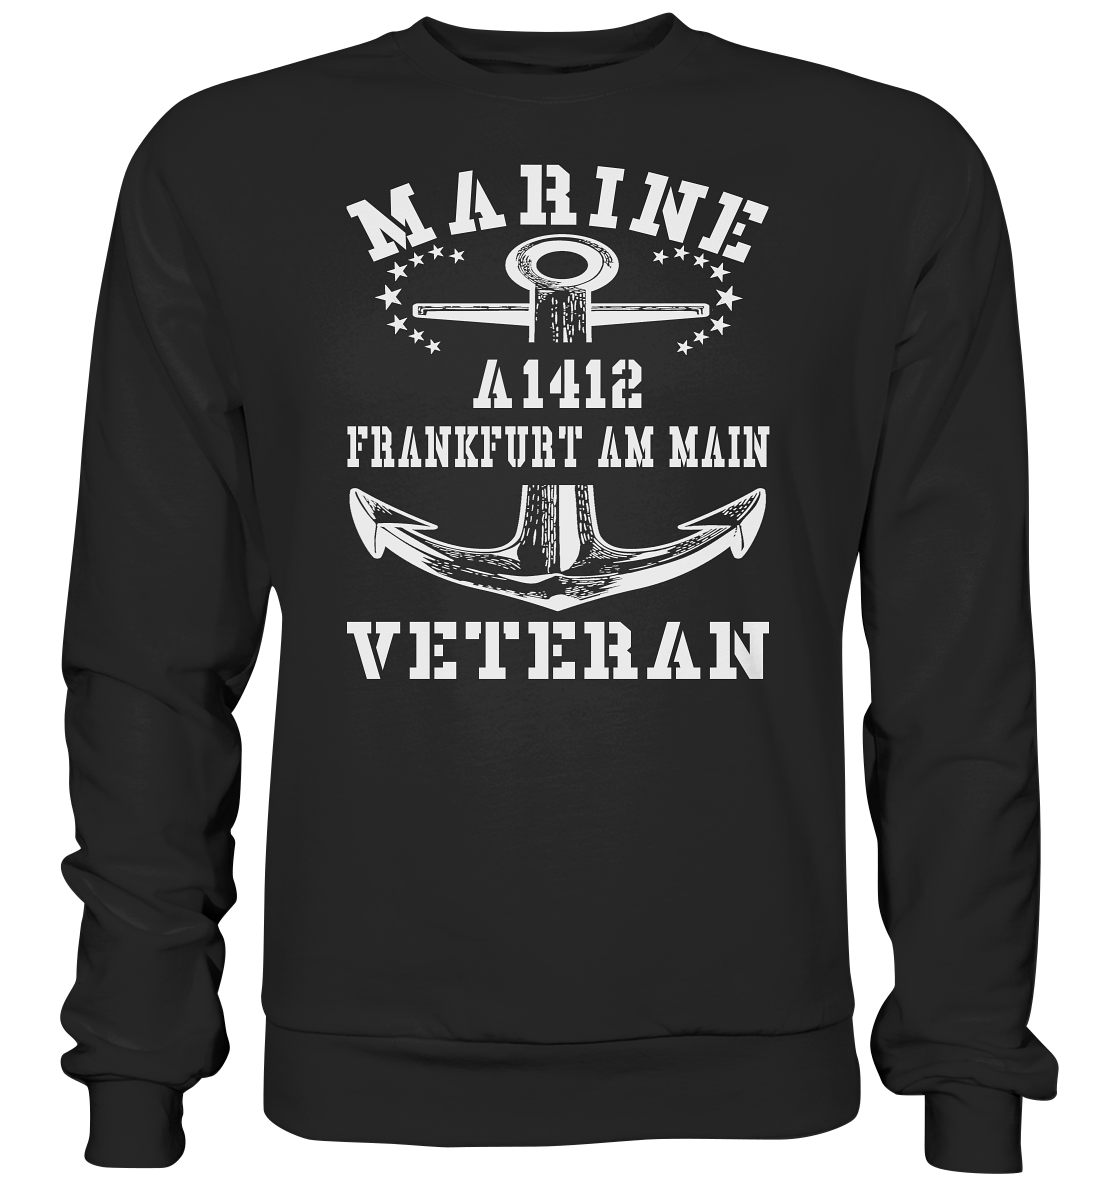 EGV A1412 FRANKFURT AM MAIN Marine Veteran - Premium Sweatshirt